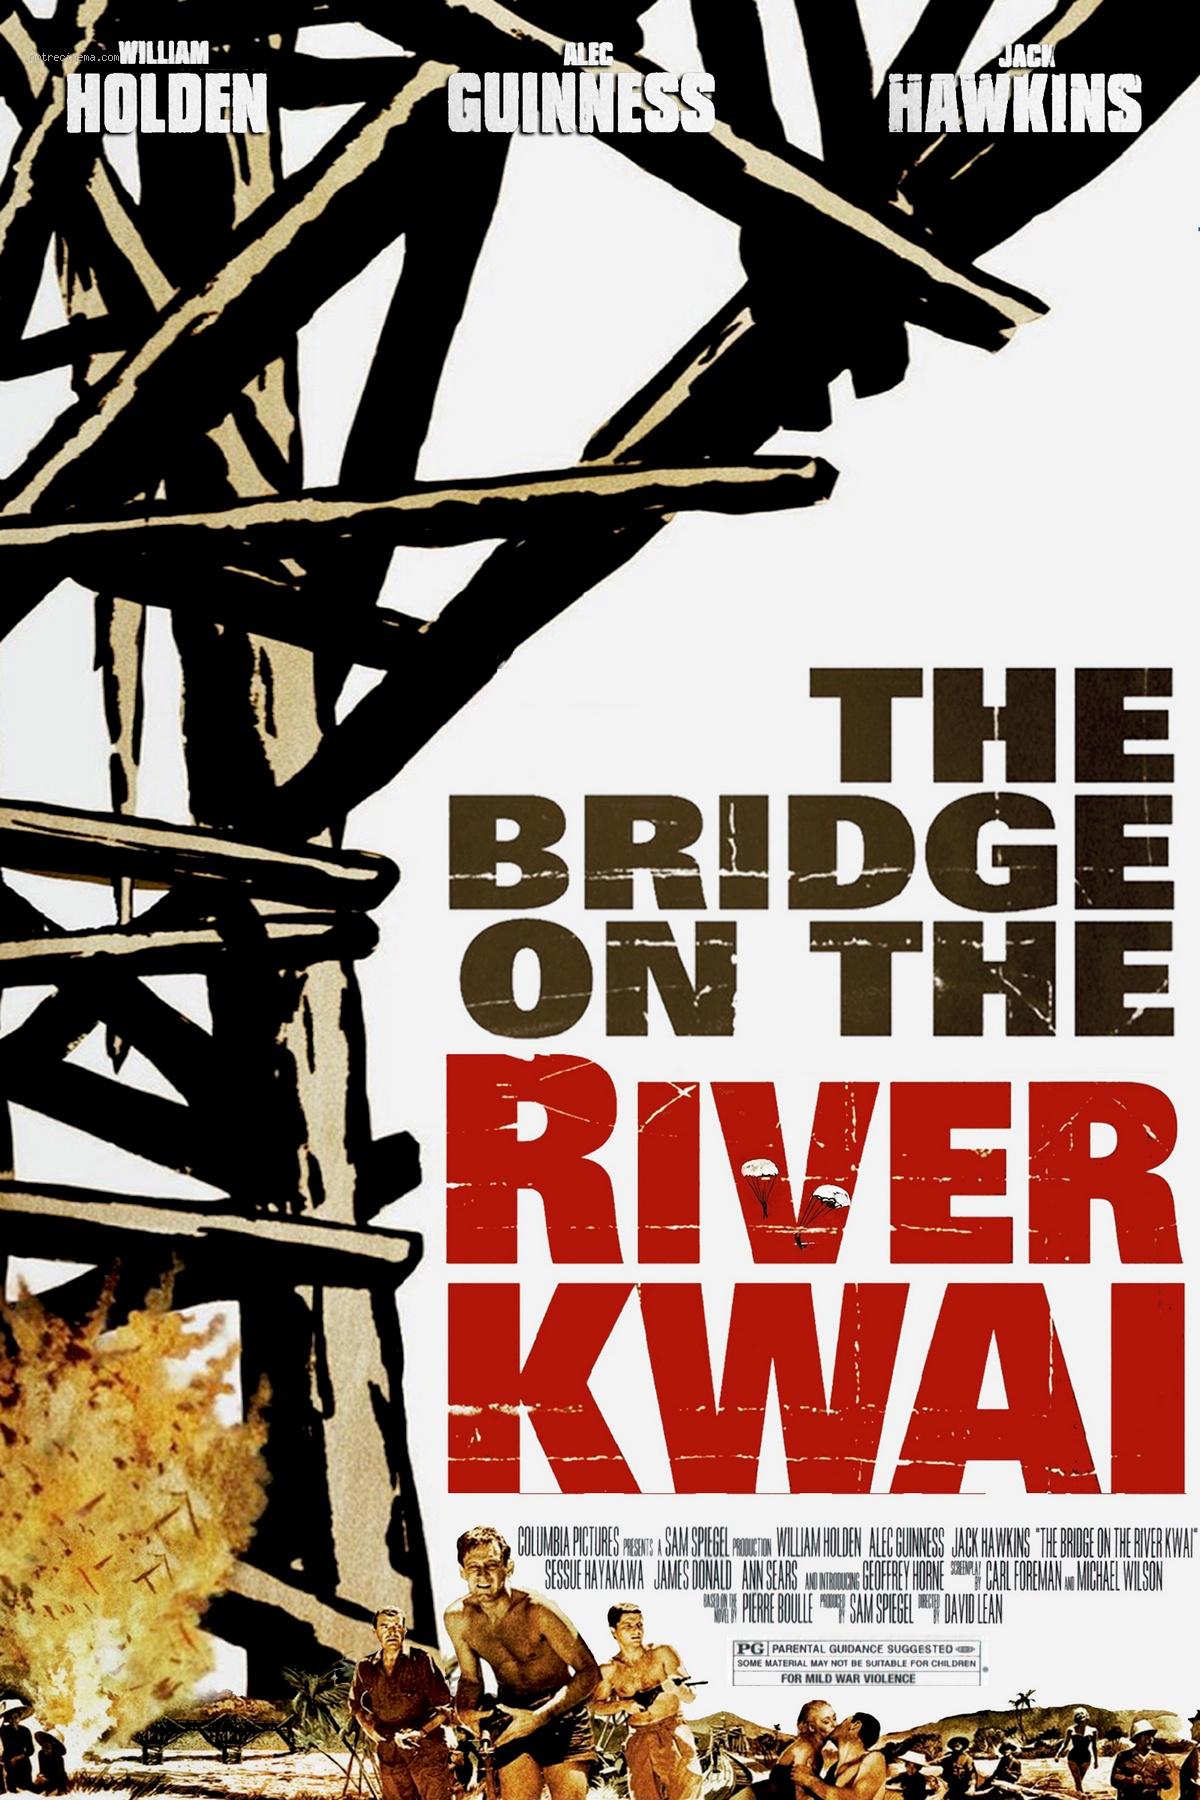 The Bridge on the river Kwaï